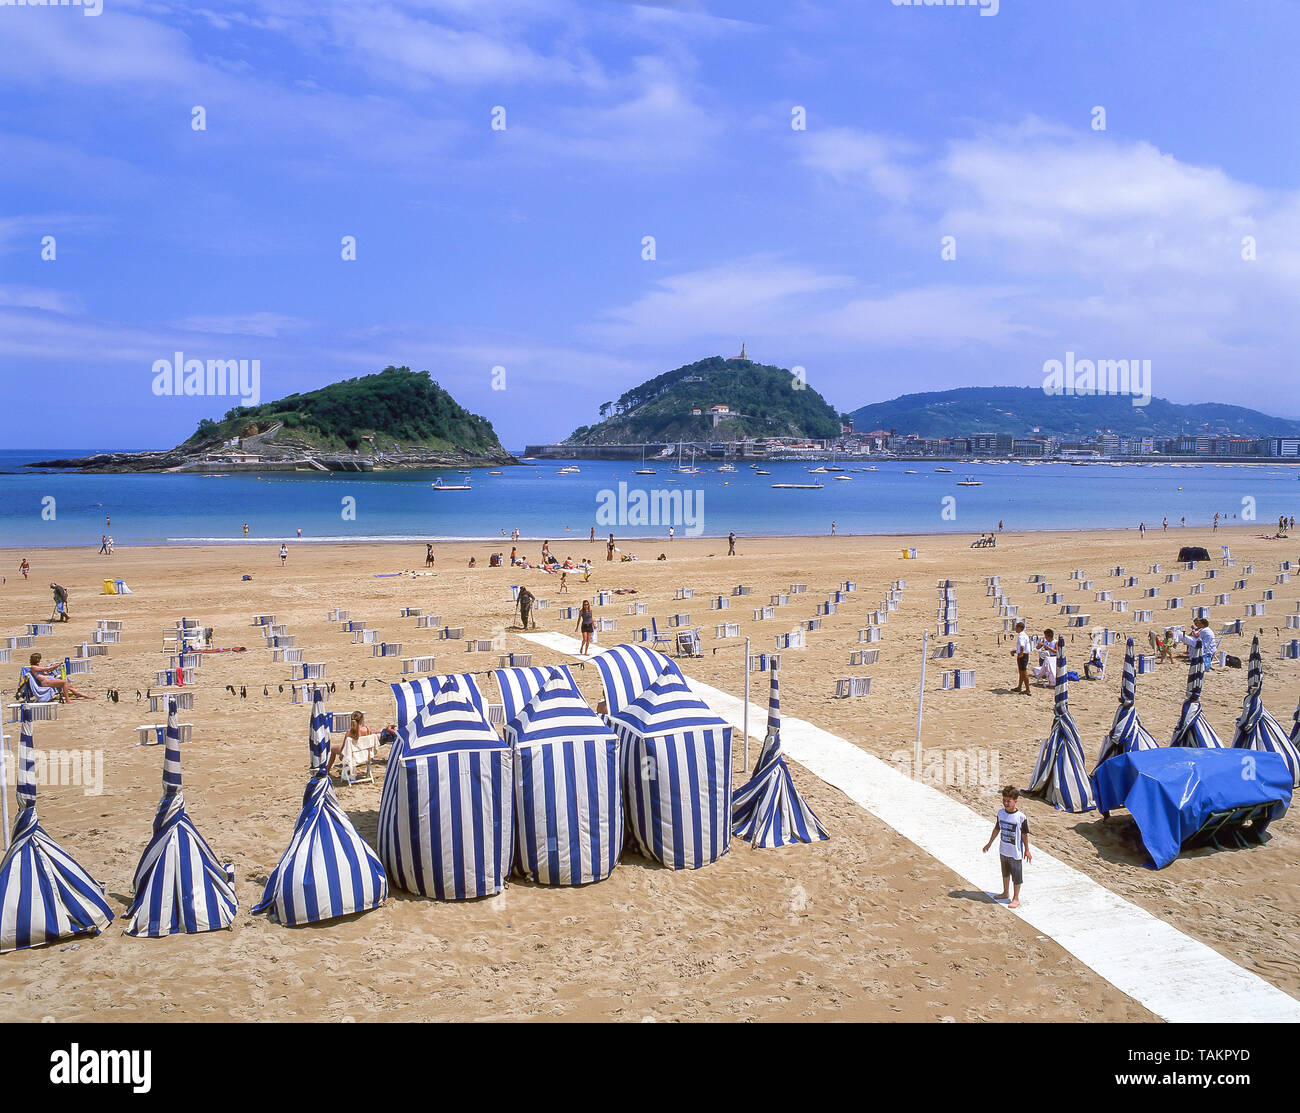 Traditional beach tents on La Concha Beach, Bahia de La Concha, San Sebastian (Donostia), Basque Country (Pais Vasco), Spain Stock Photo